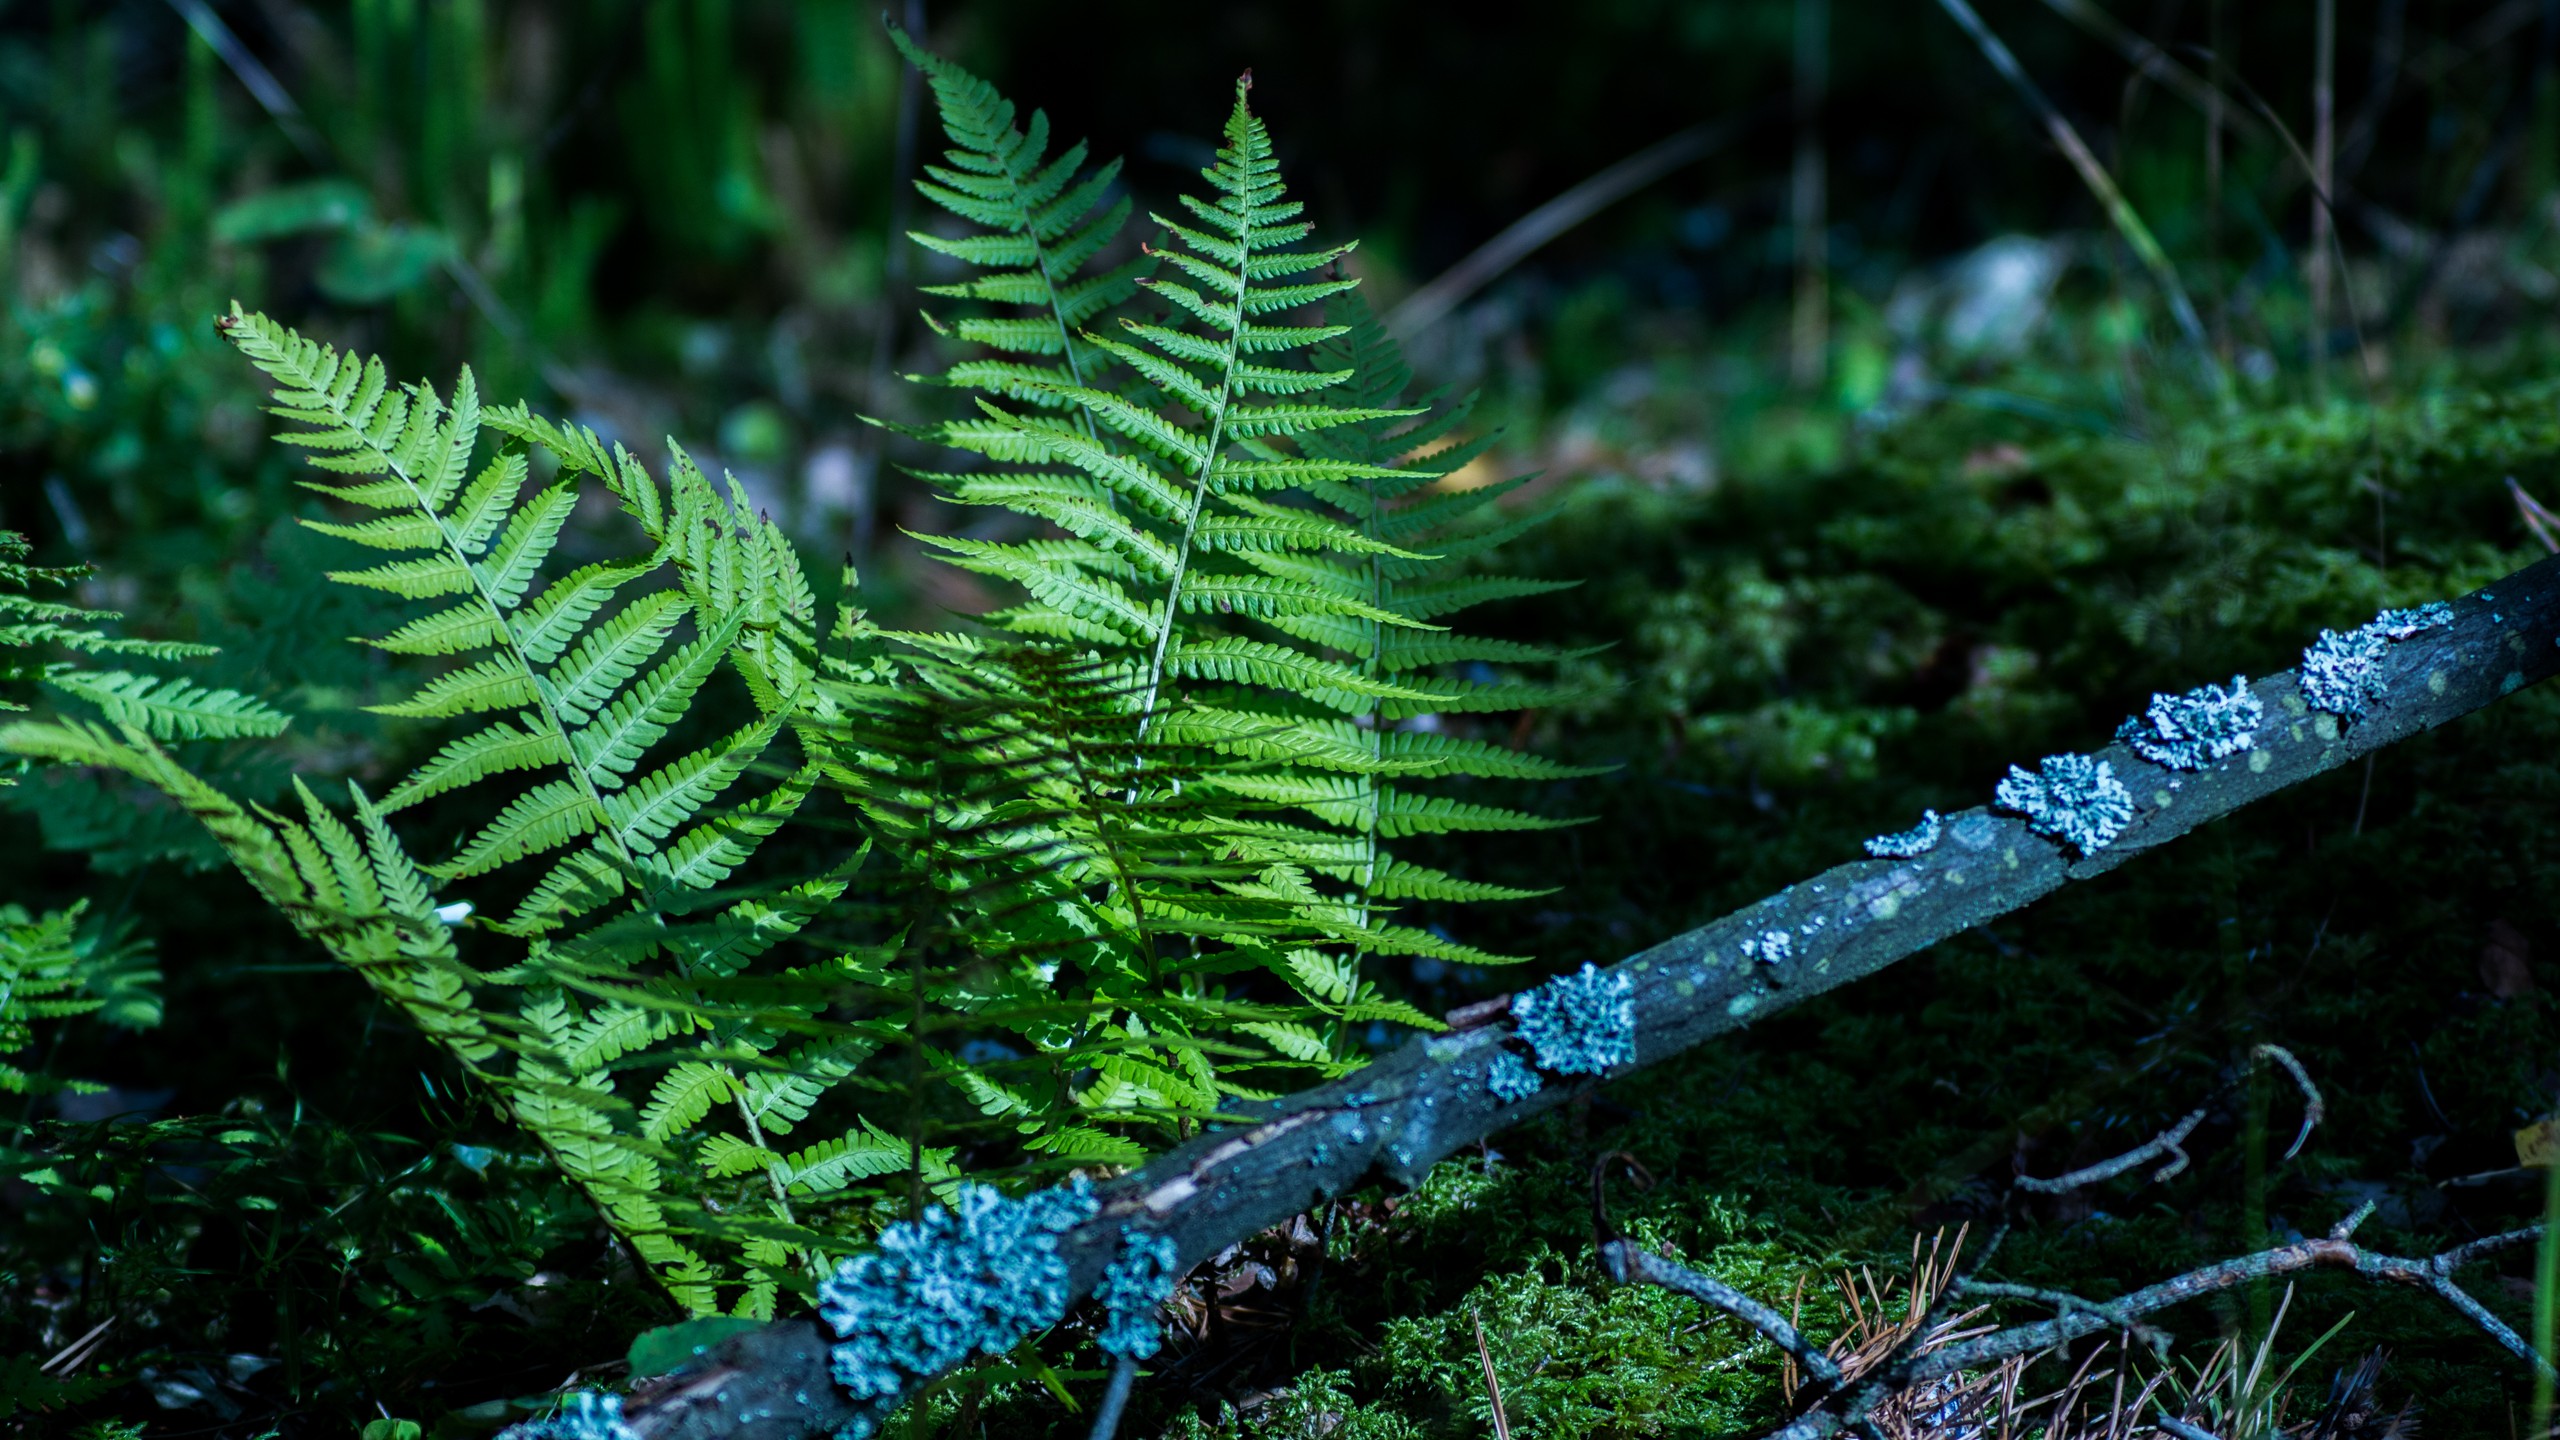 General 2560x1440 forest wood nature natural light Masuria ferns plants